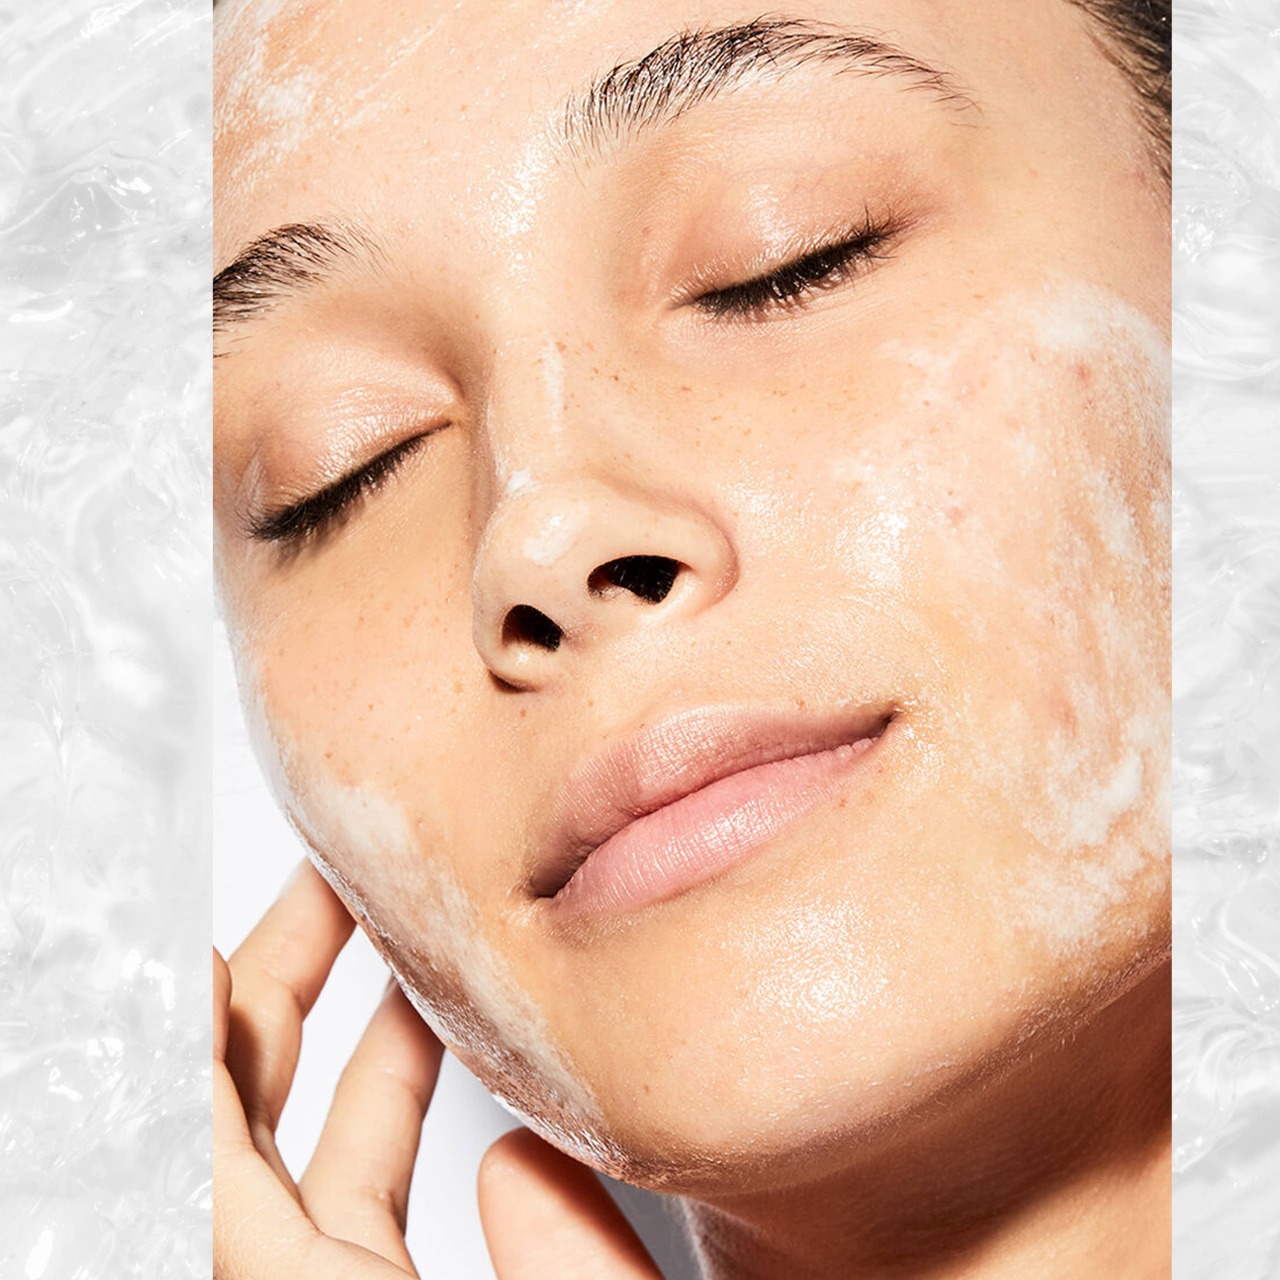 Cleansing Acne Prone Skin